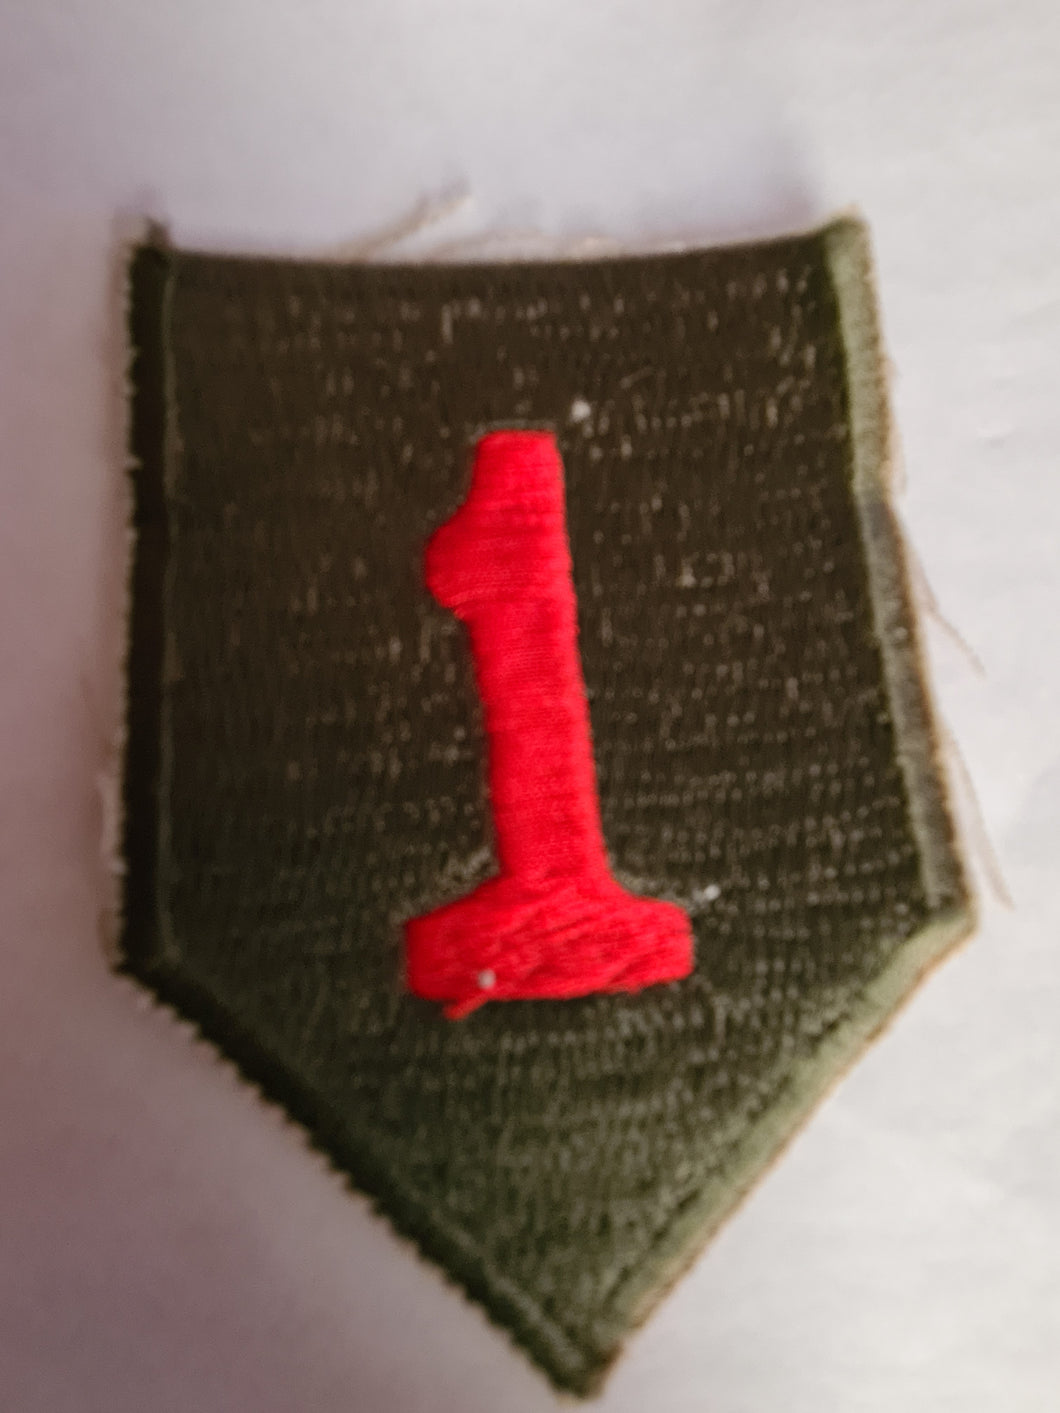 WW11/Vietnam war 1st infantry (Big Red One) shoulder patch